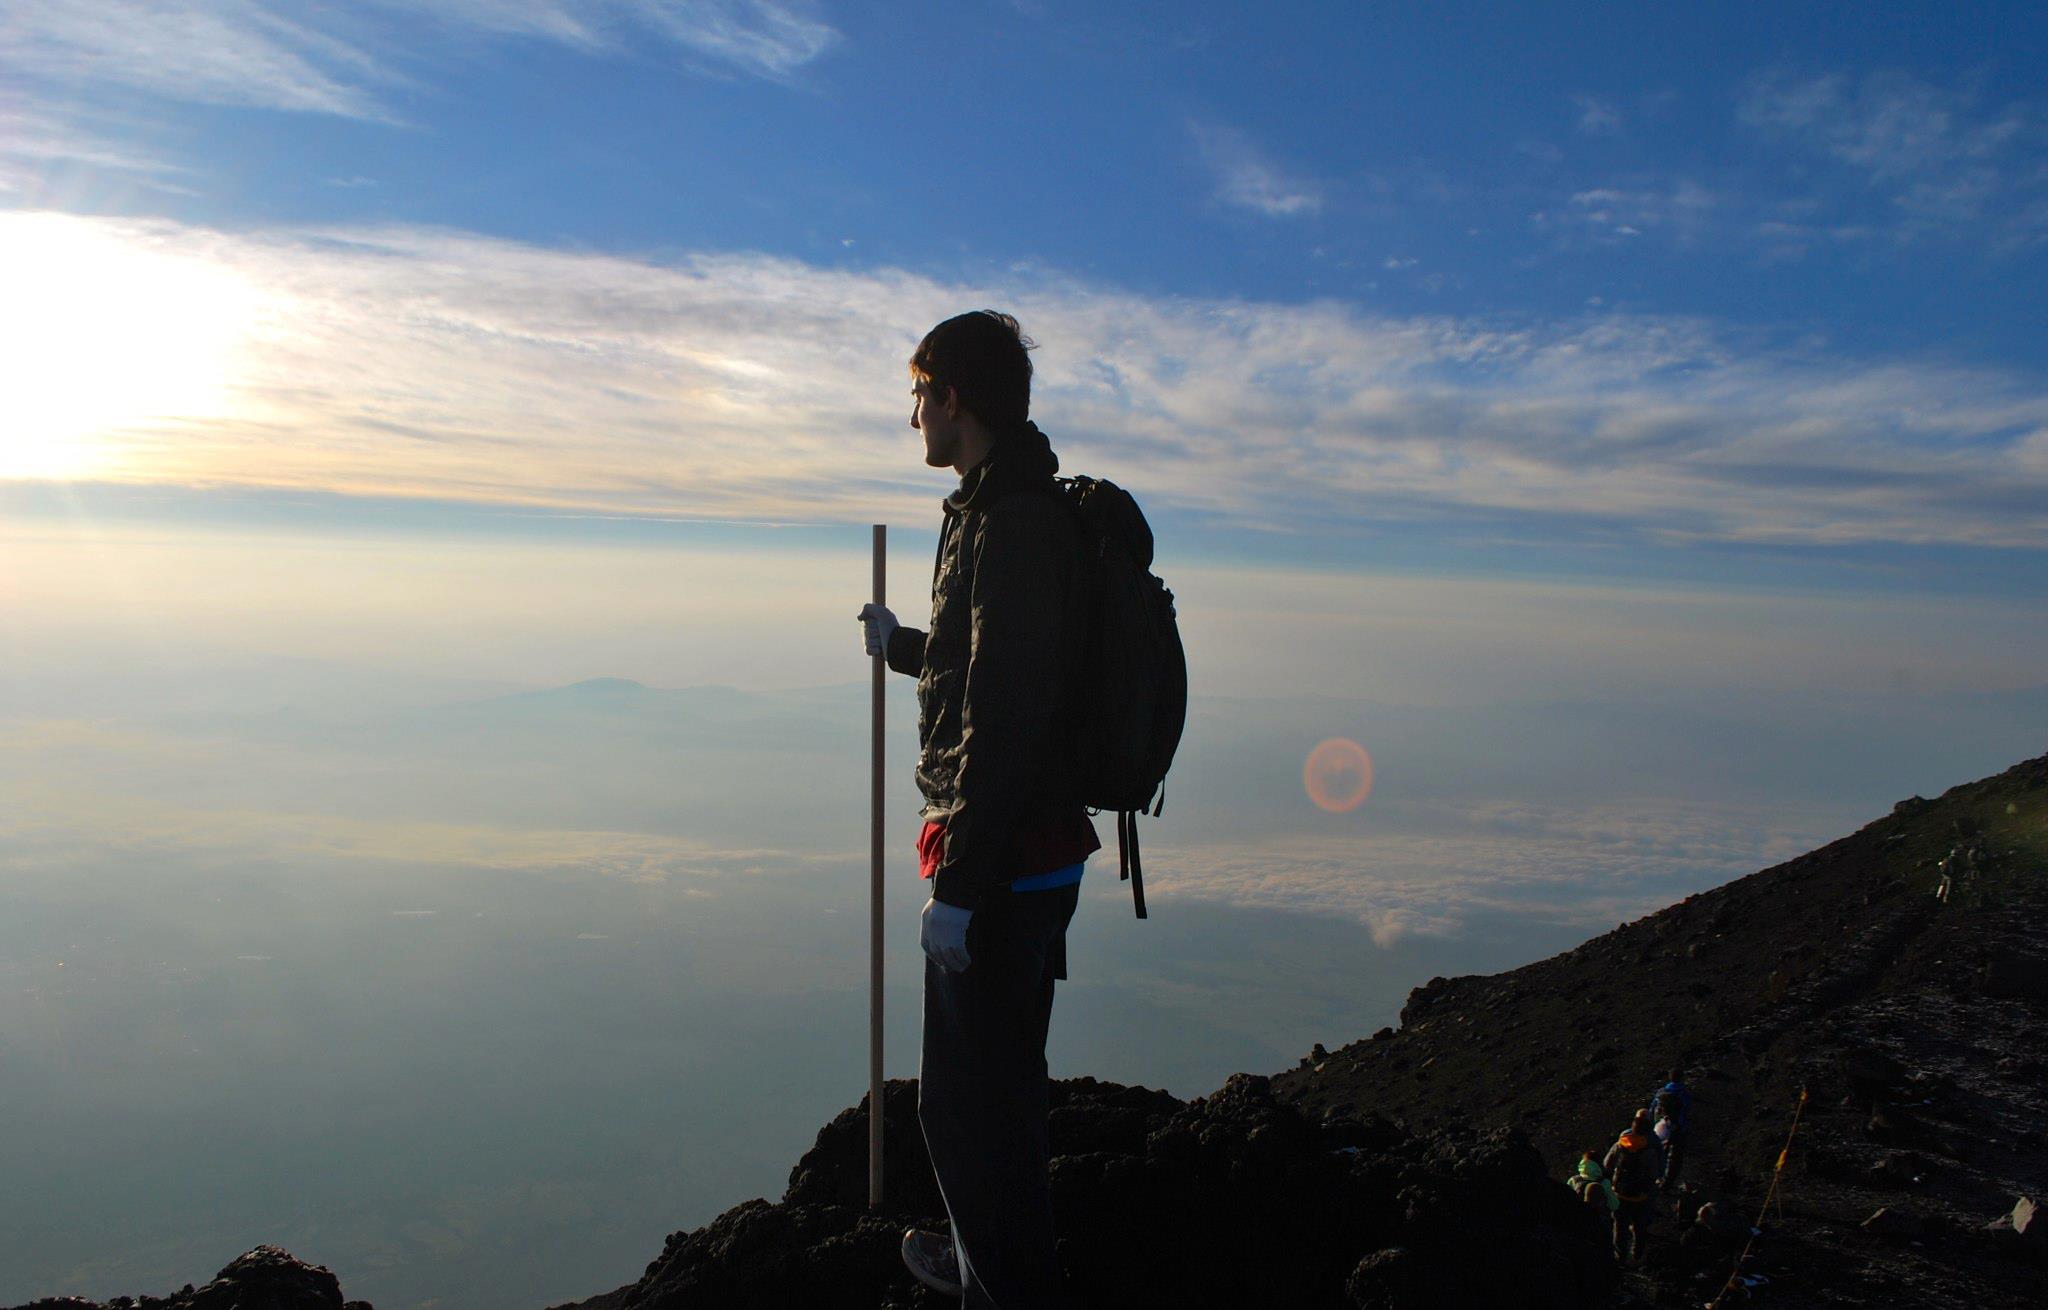 At the top of Mt. Fuji